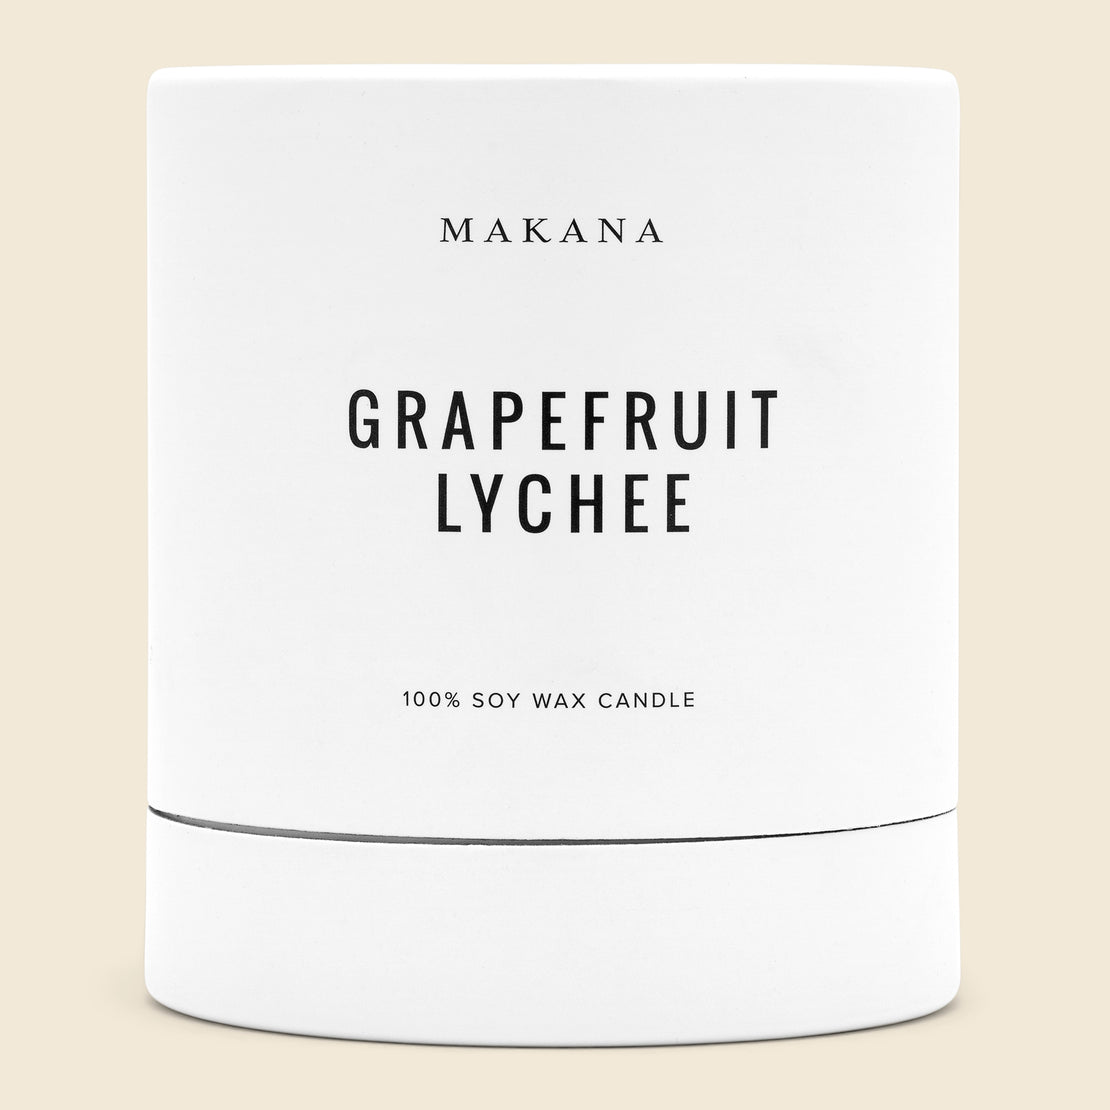 Makana Grapefruit Lychee Candle